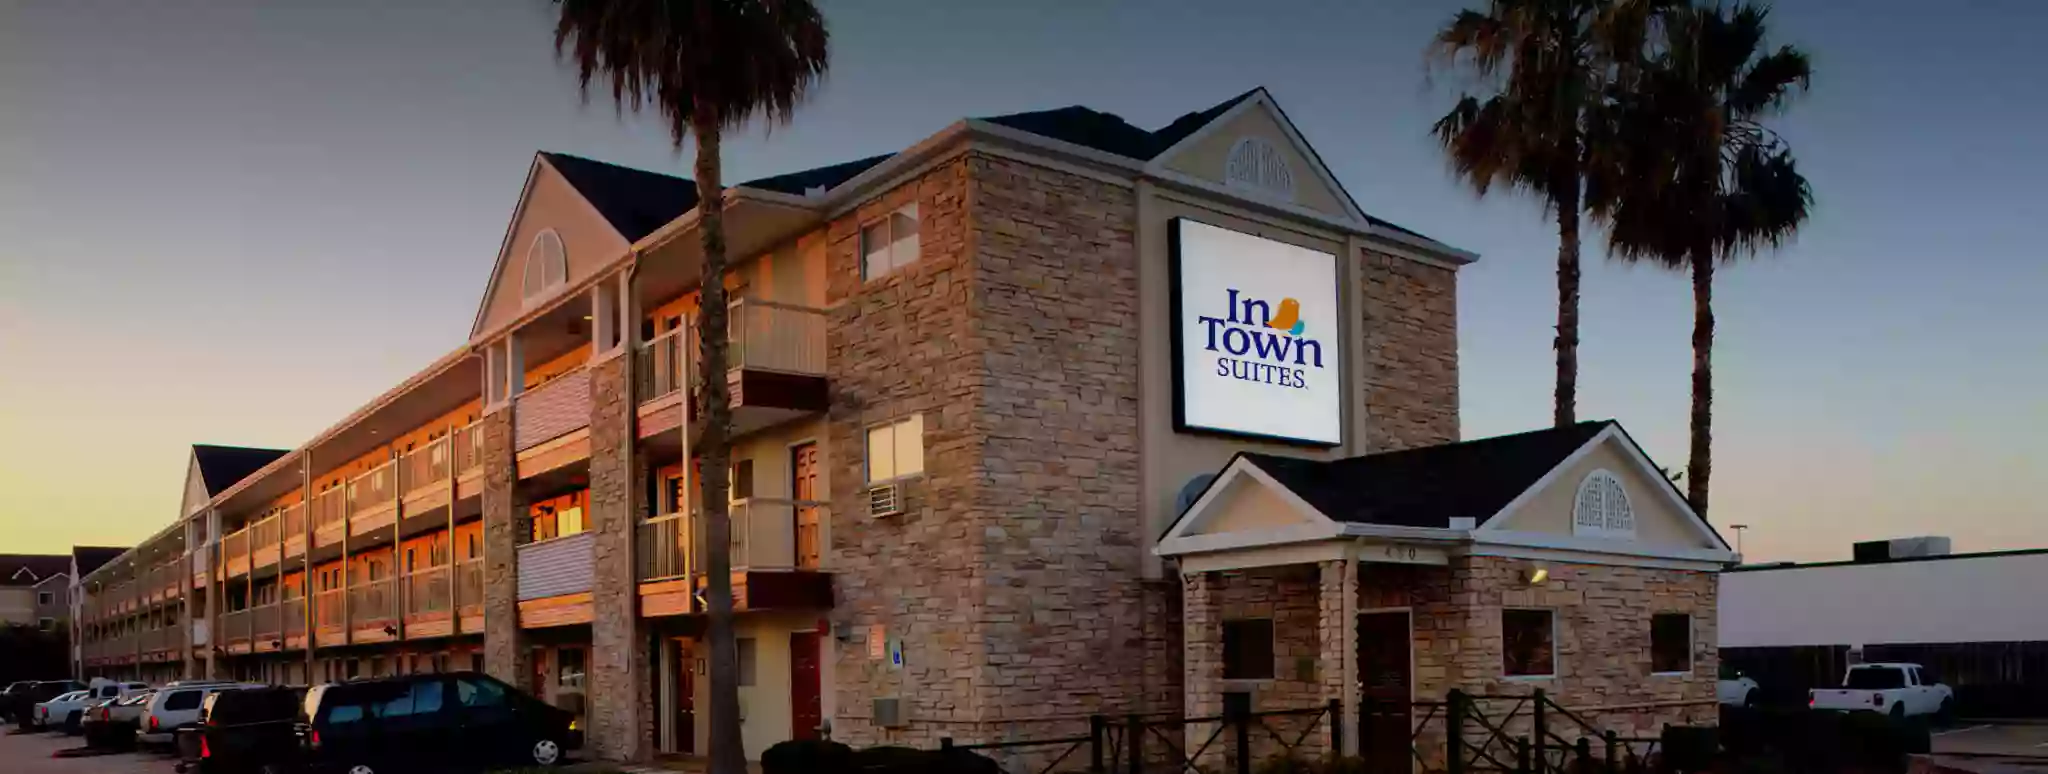 InTown Suites Extended Stay Denver CO - Aurora Havana St.